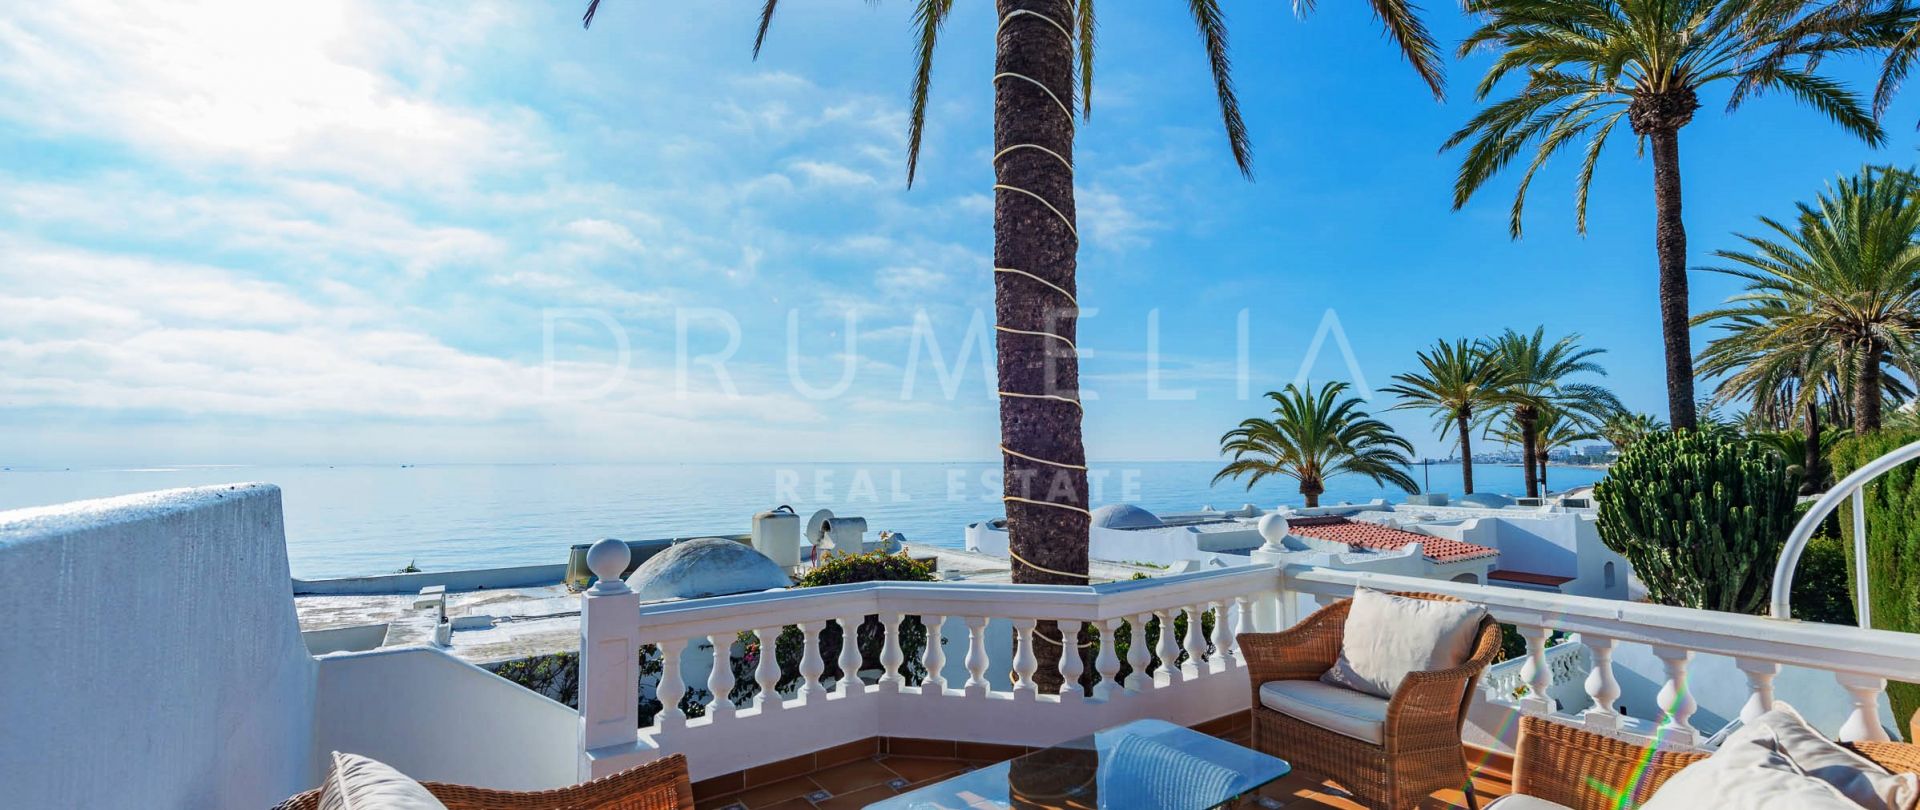 Atemberaubendes Luxus-Stadthaus direkt am Strand, Oasis Club Resort, Goldene Meile, Marbella